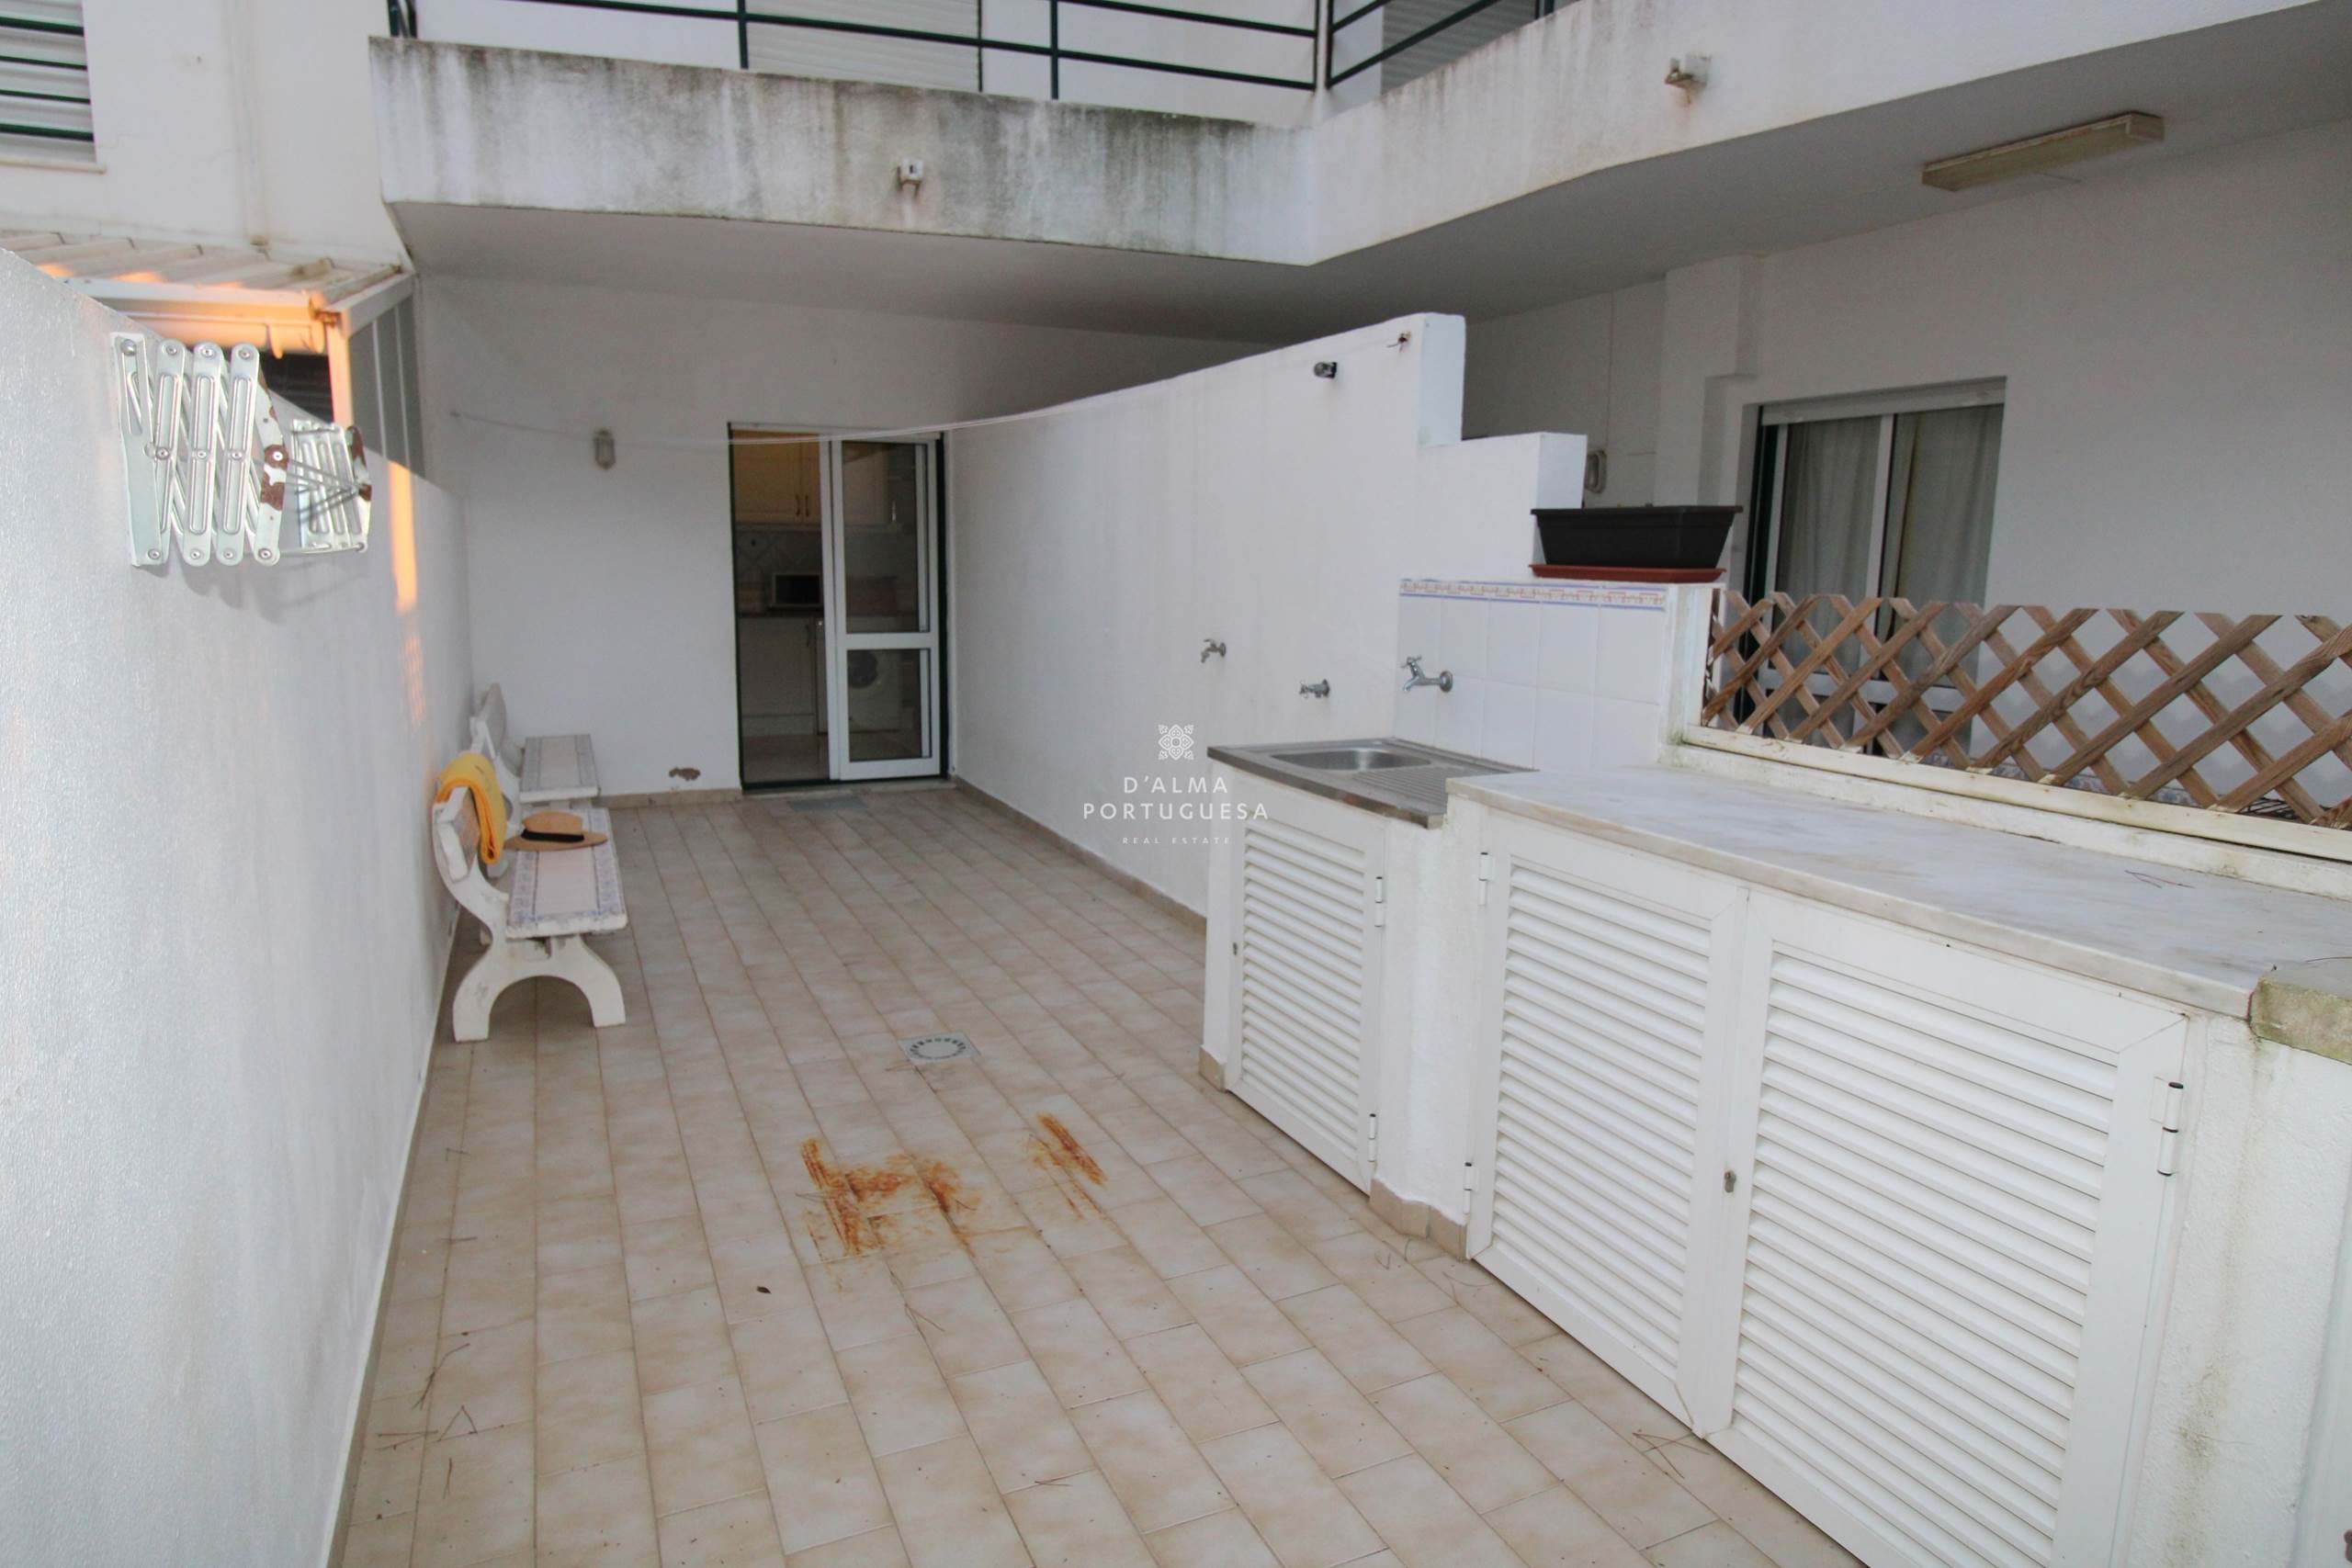 2 bedroom apartment ,ground floor,terrace,quiet area,near Falésia beach 